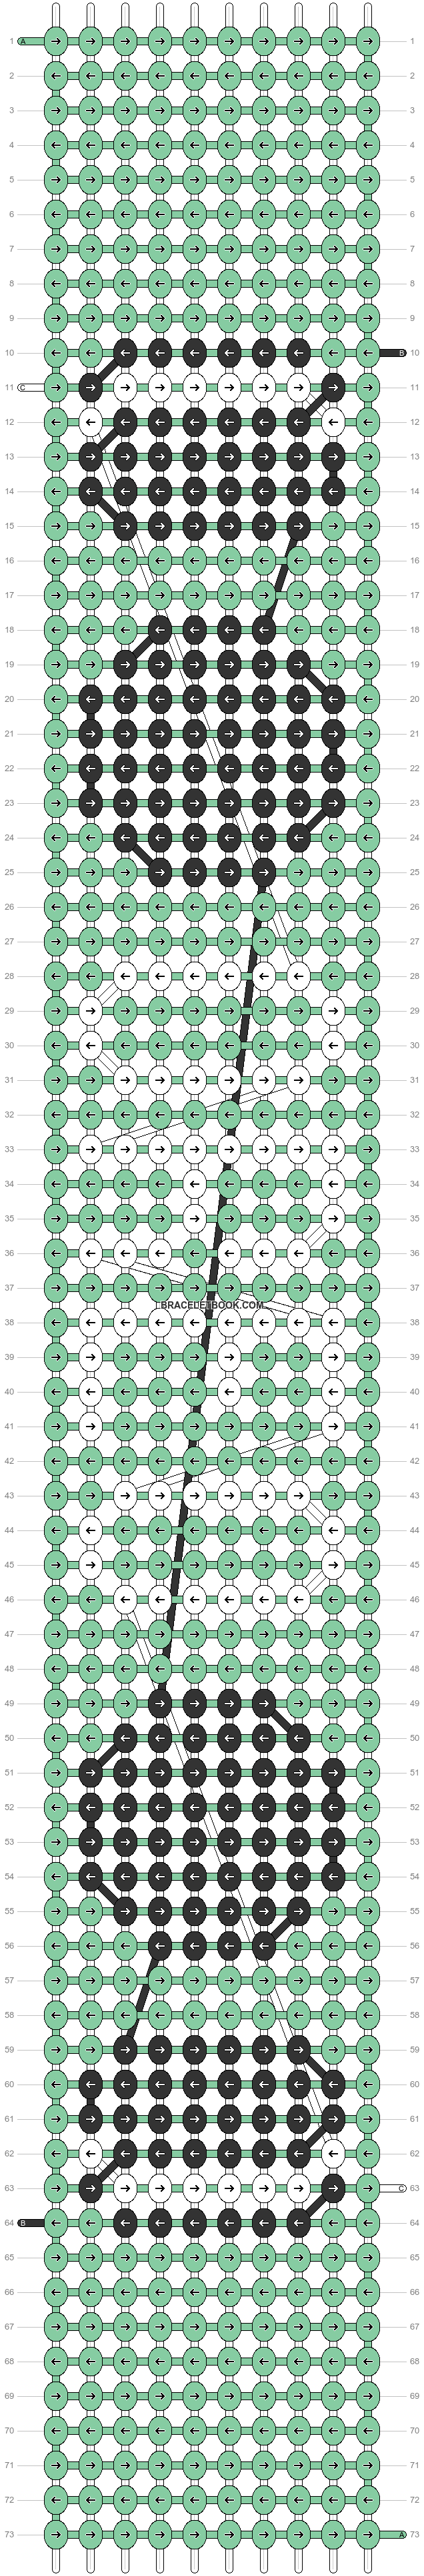 Alpha pattern #45415 variation #69642 pattern